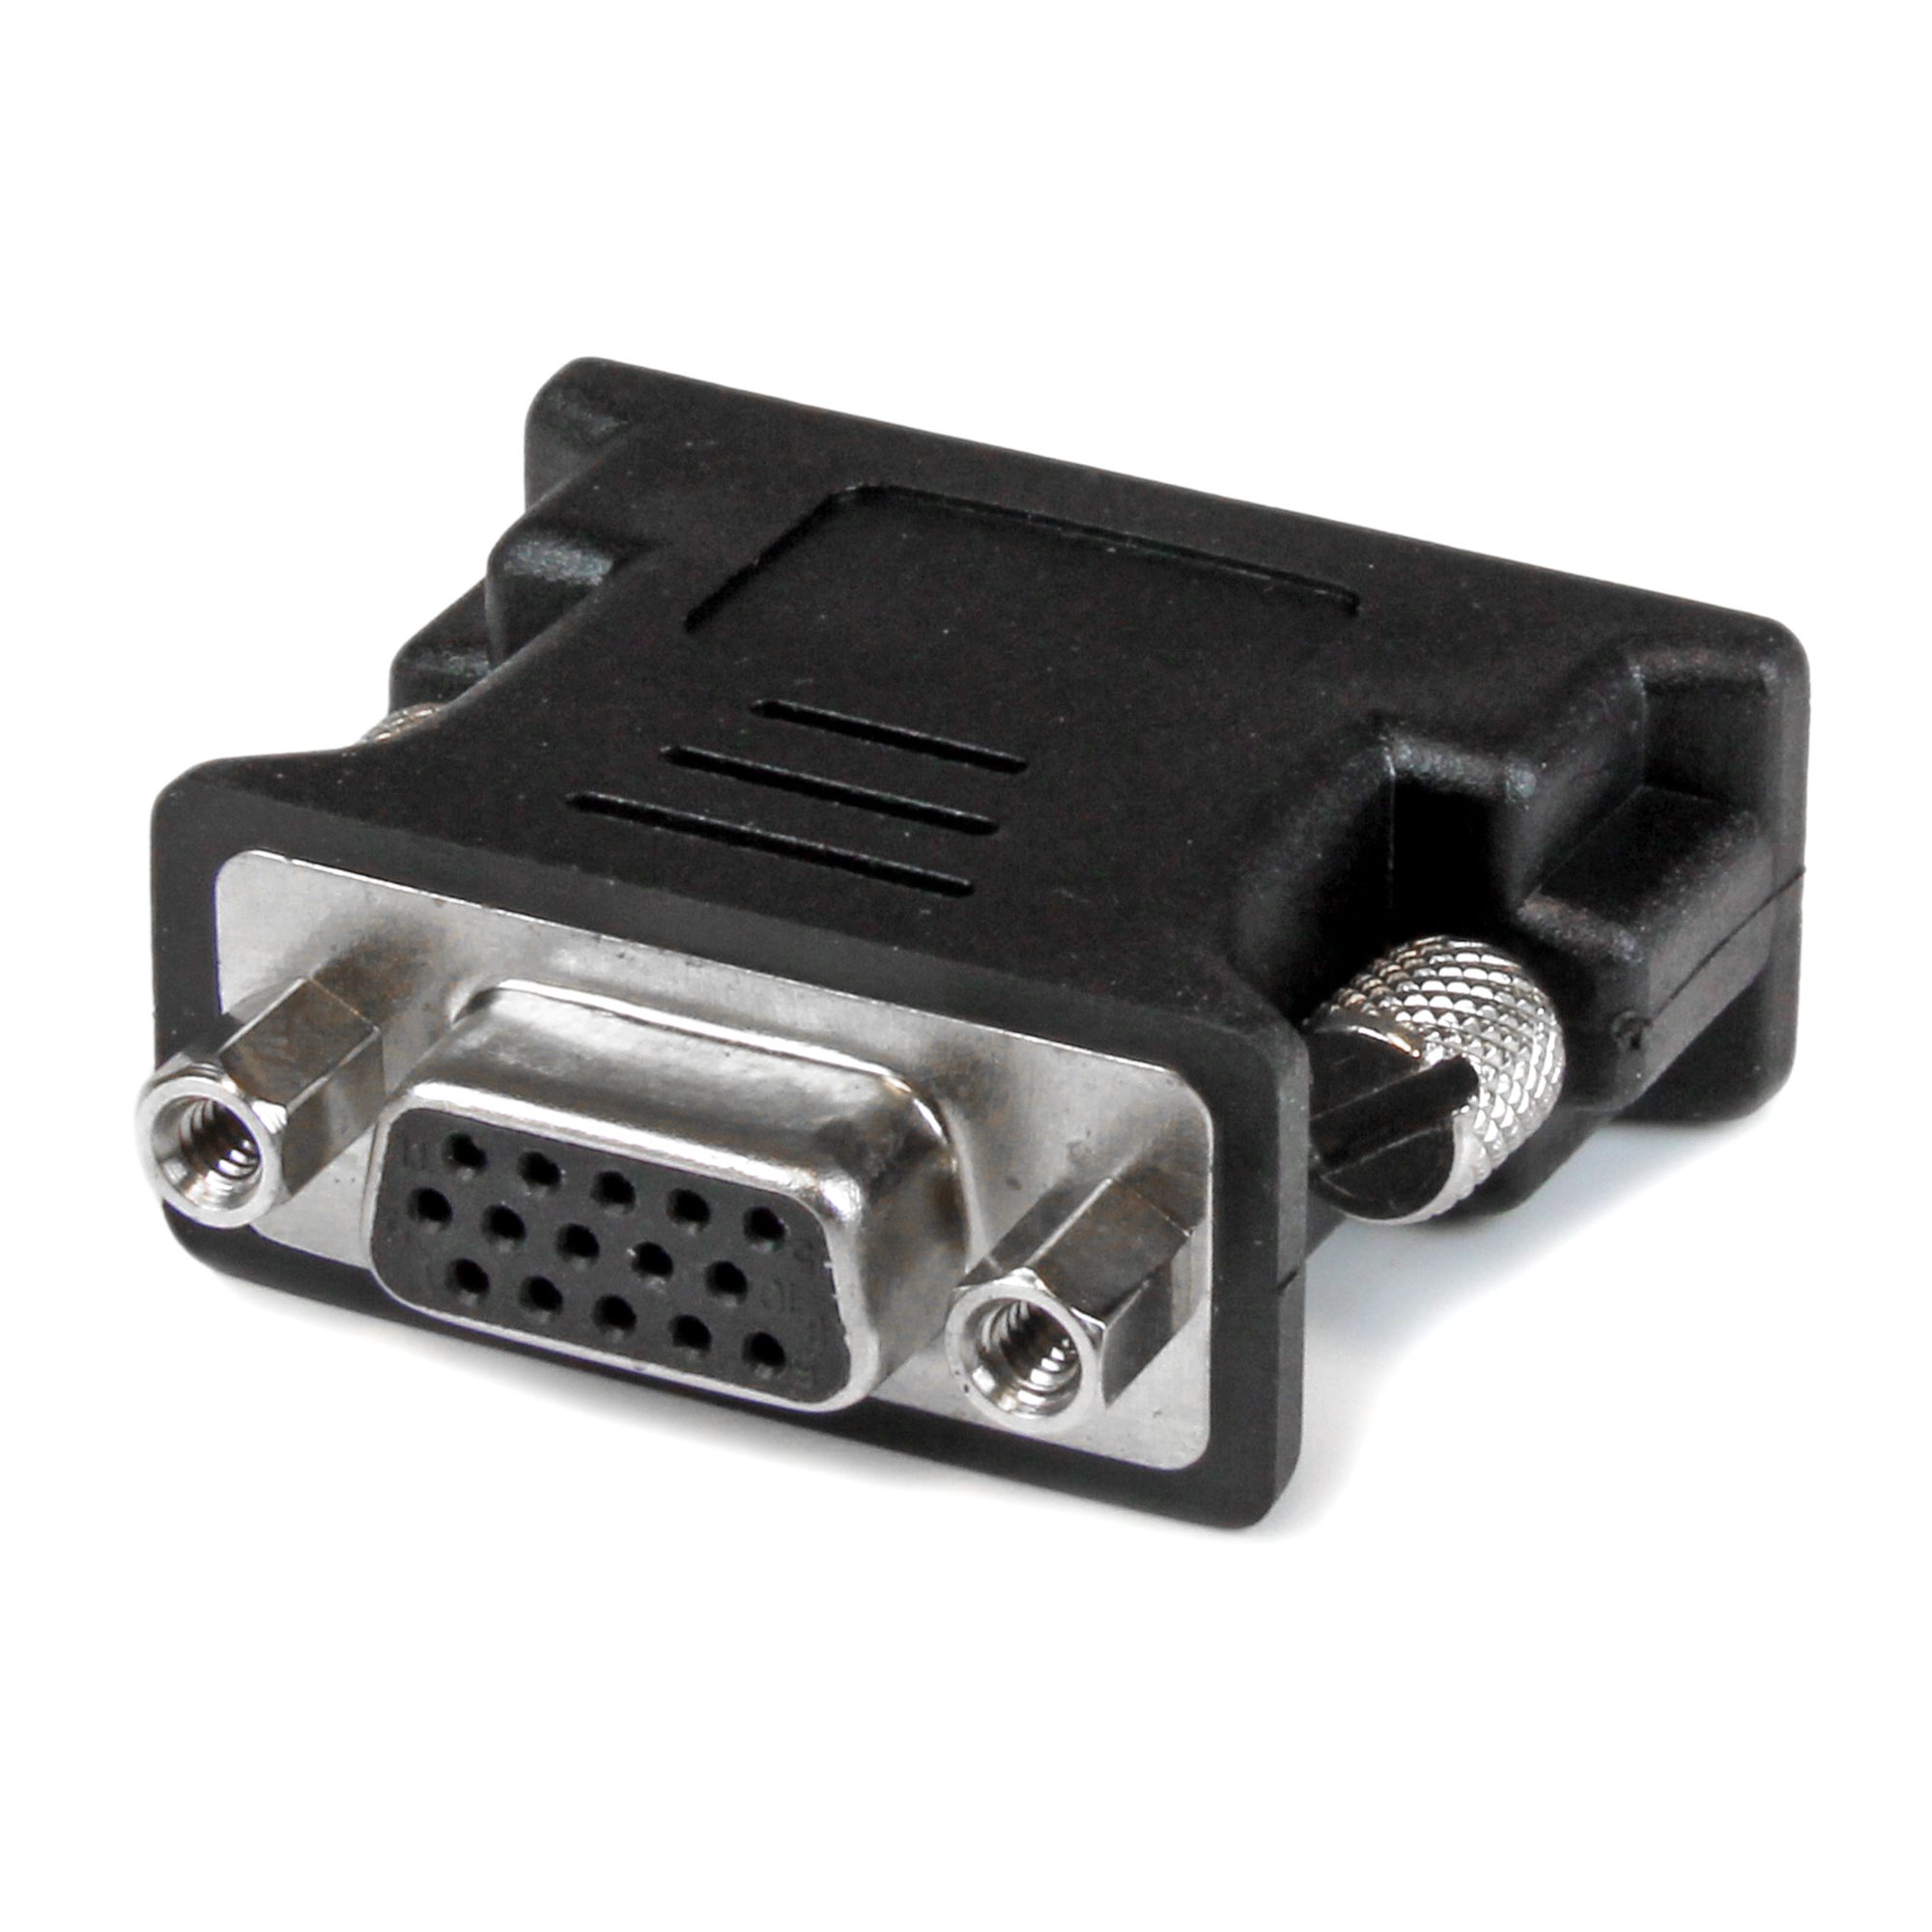 USB to DVI or VGA Adapter - Mac & PC - USBビデオアダプタ